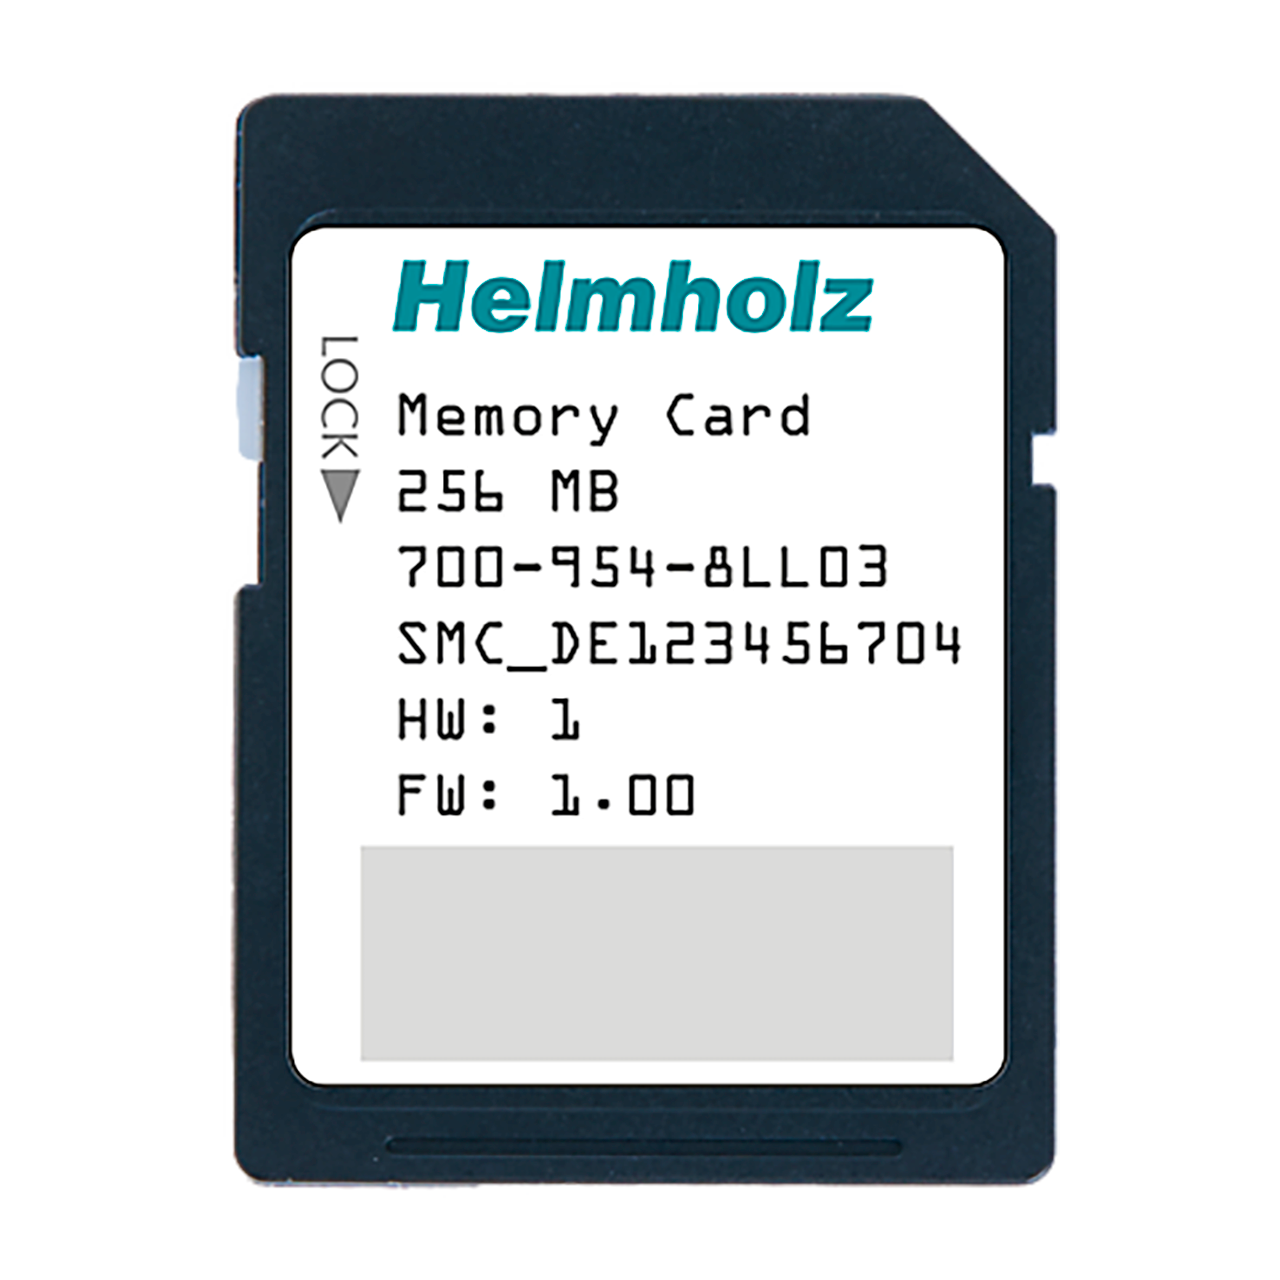 Helmholz Tarjeta de Memoria para S7-1200 / S7-1500, 256 MByte 700-954-8LL03